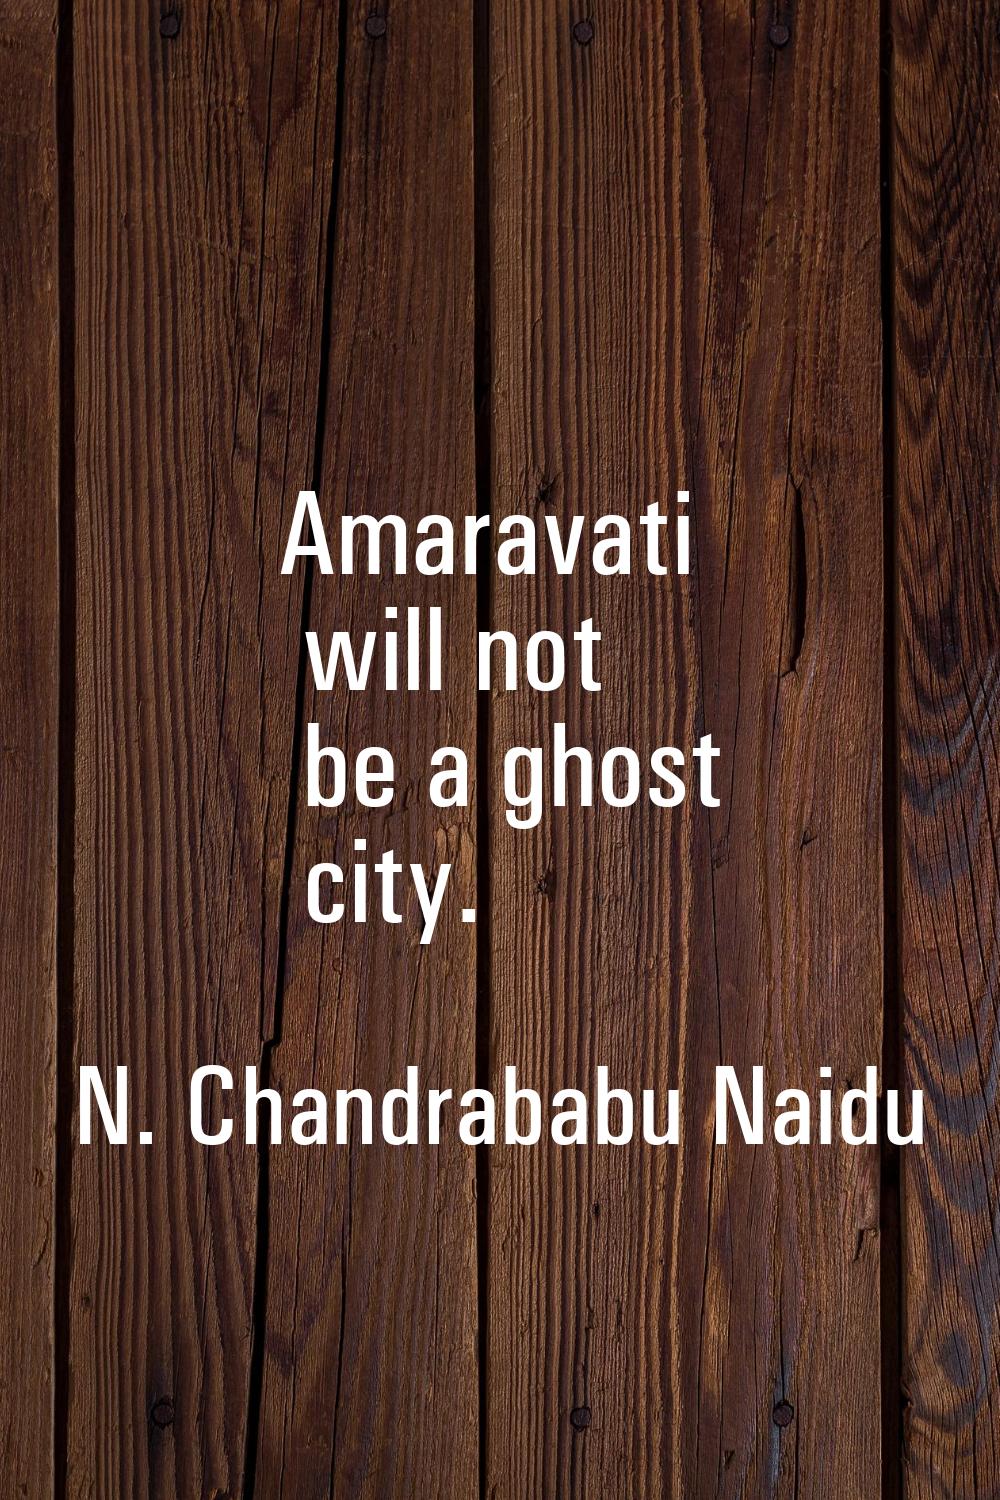 Amaravati will not be a ghost city.